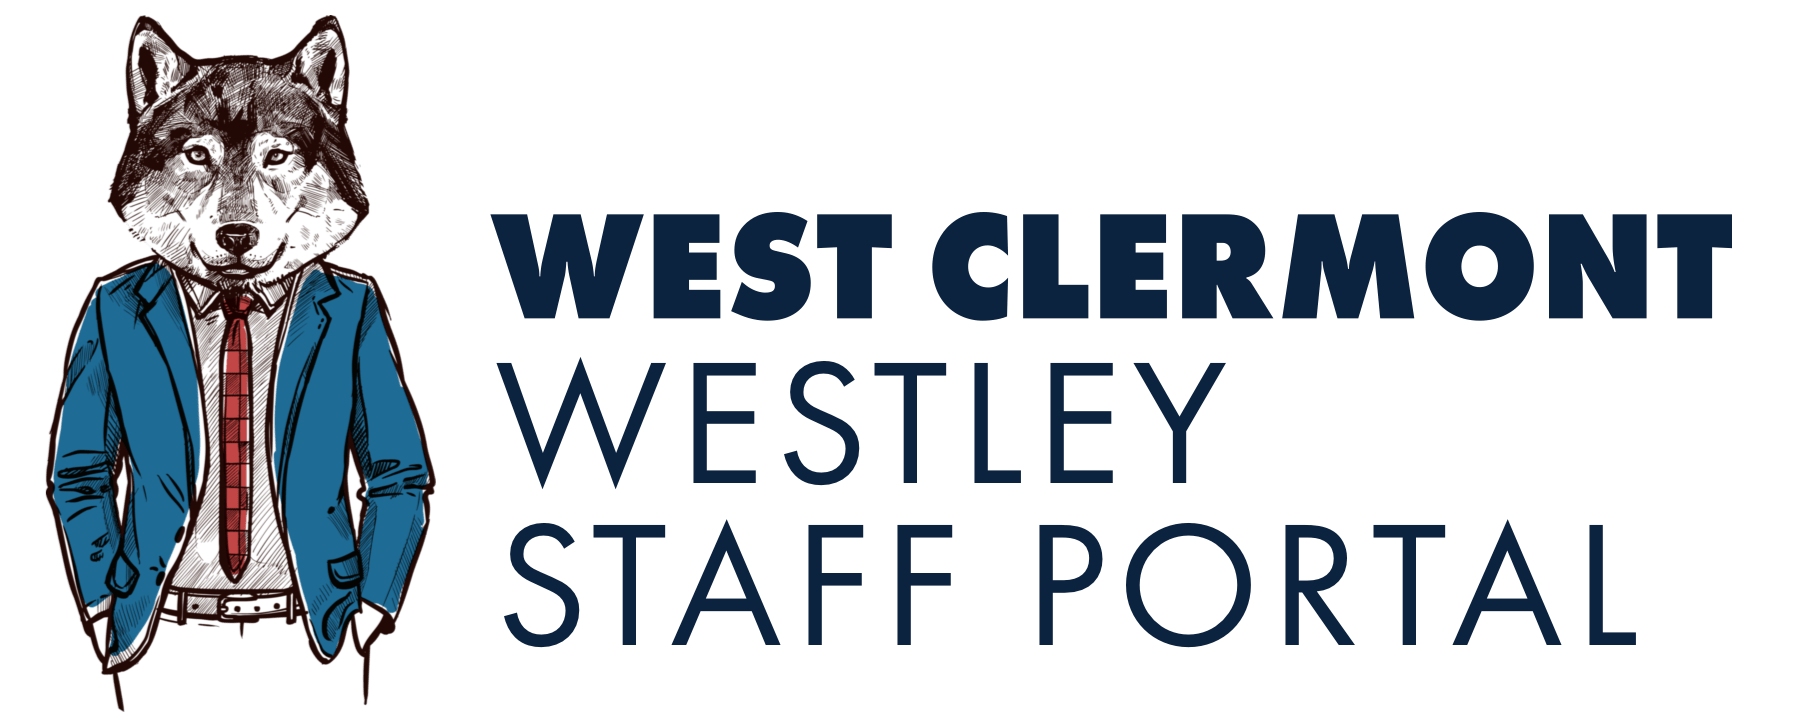 West Clermont Westley Staff Portal